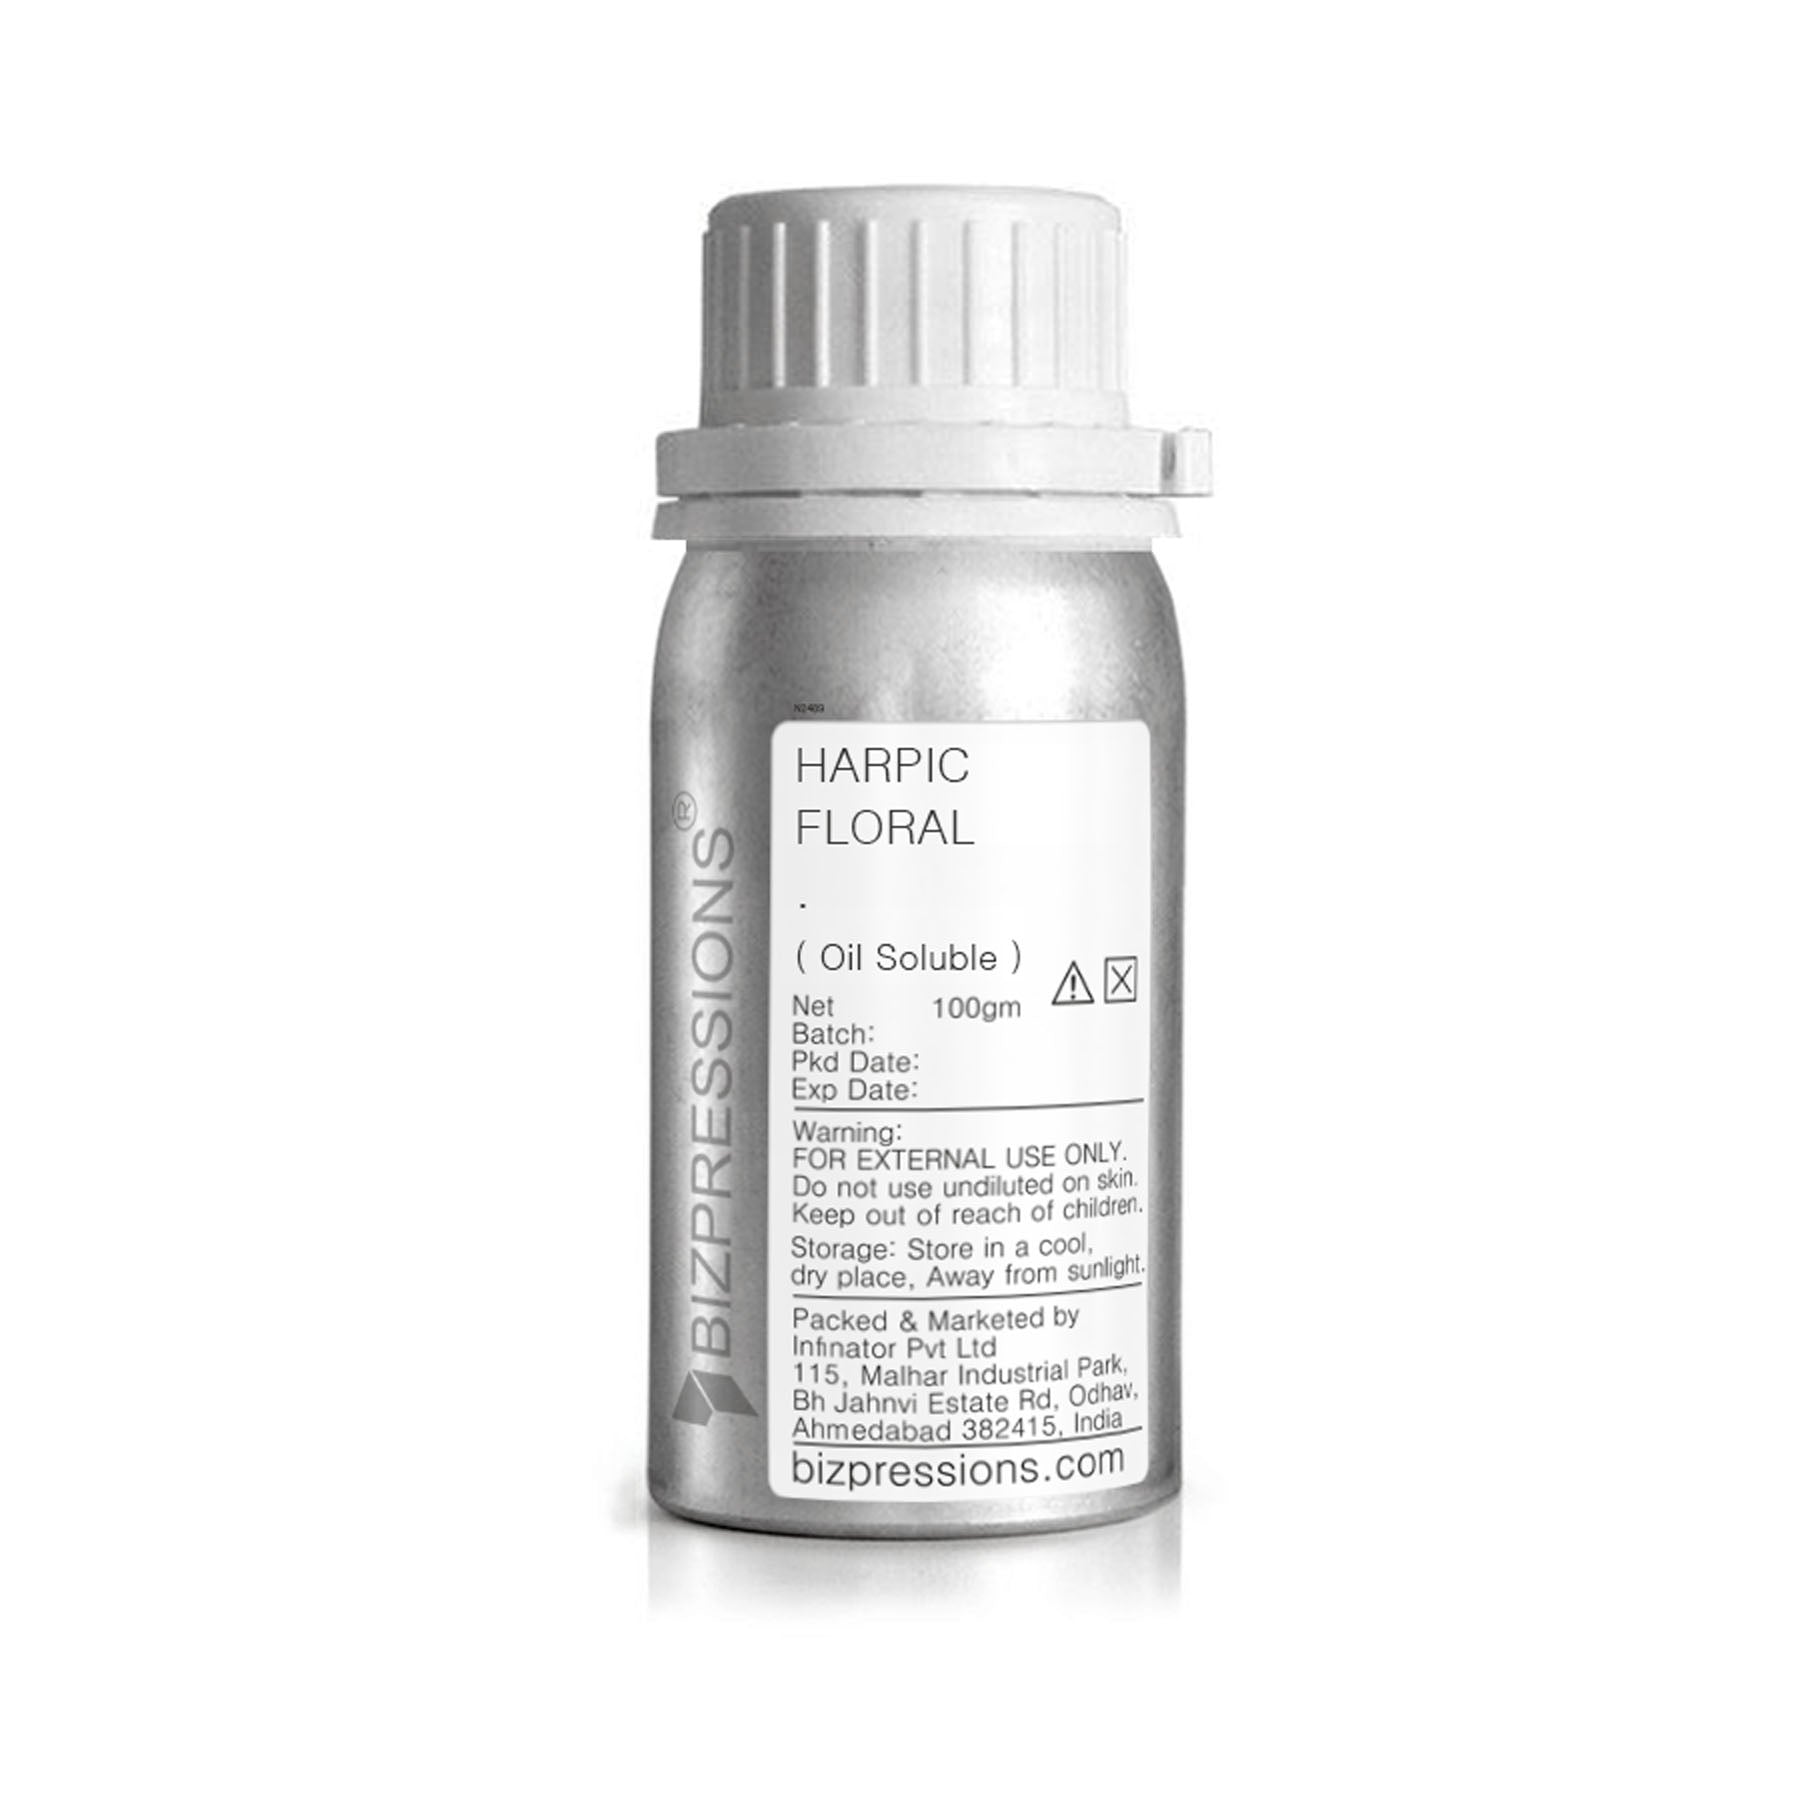 HARPIC FLORAL - Fragrance ( Oil Soluble ) - 100 gm